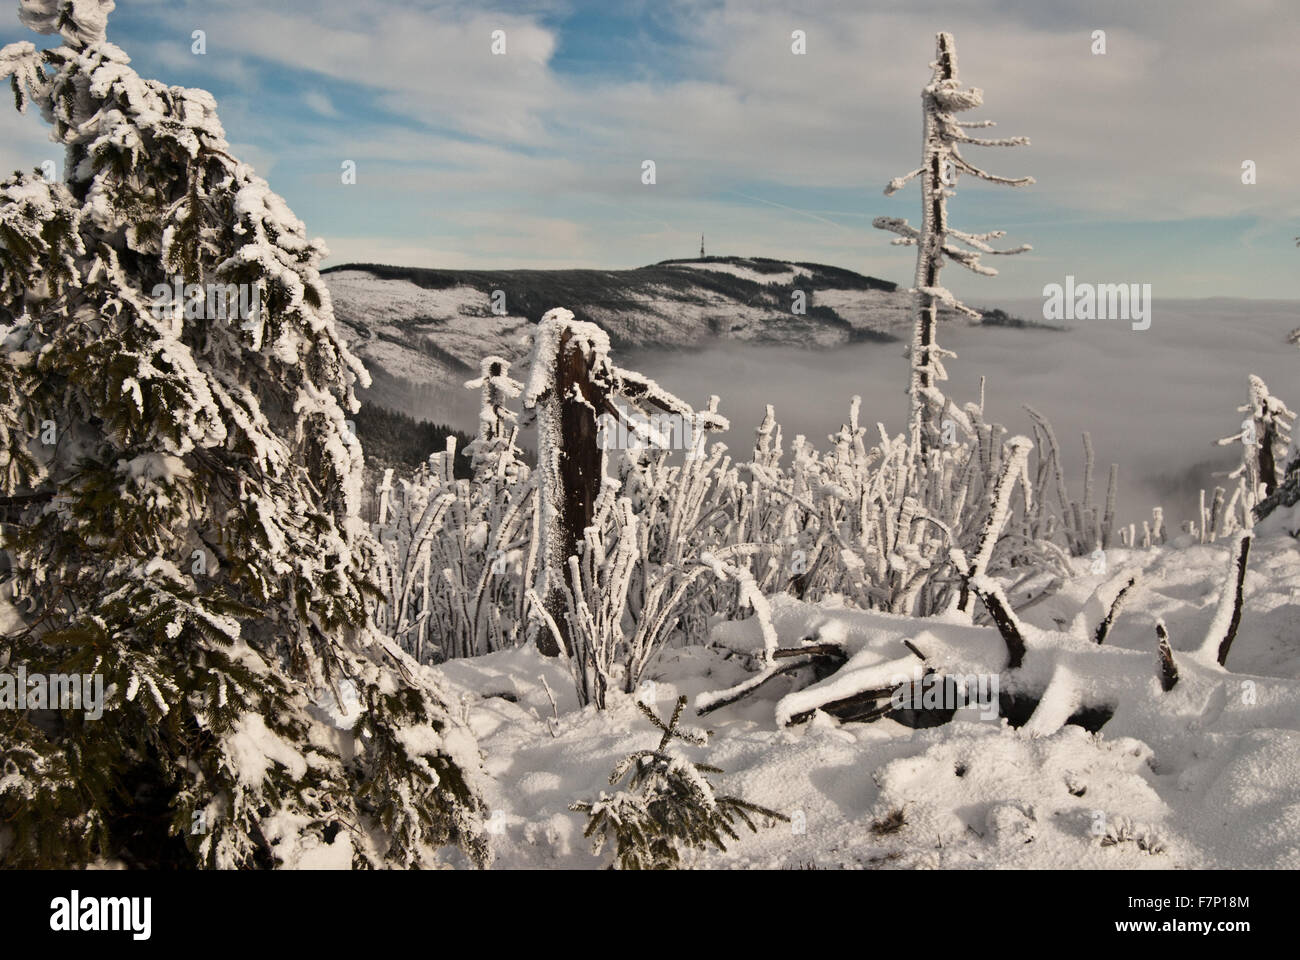 Skrzyczne hill above misty from Zielony Kopiec hill in winter Beskid Slaski mountains near Wisla Stock Photo